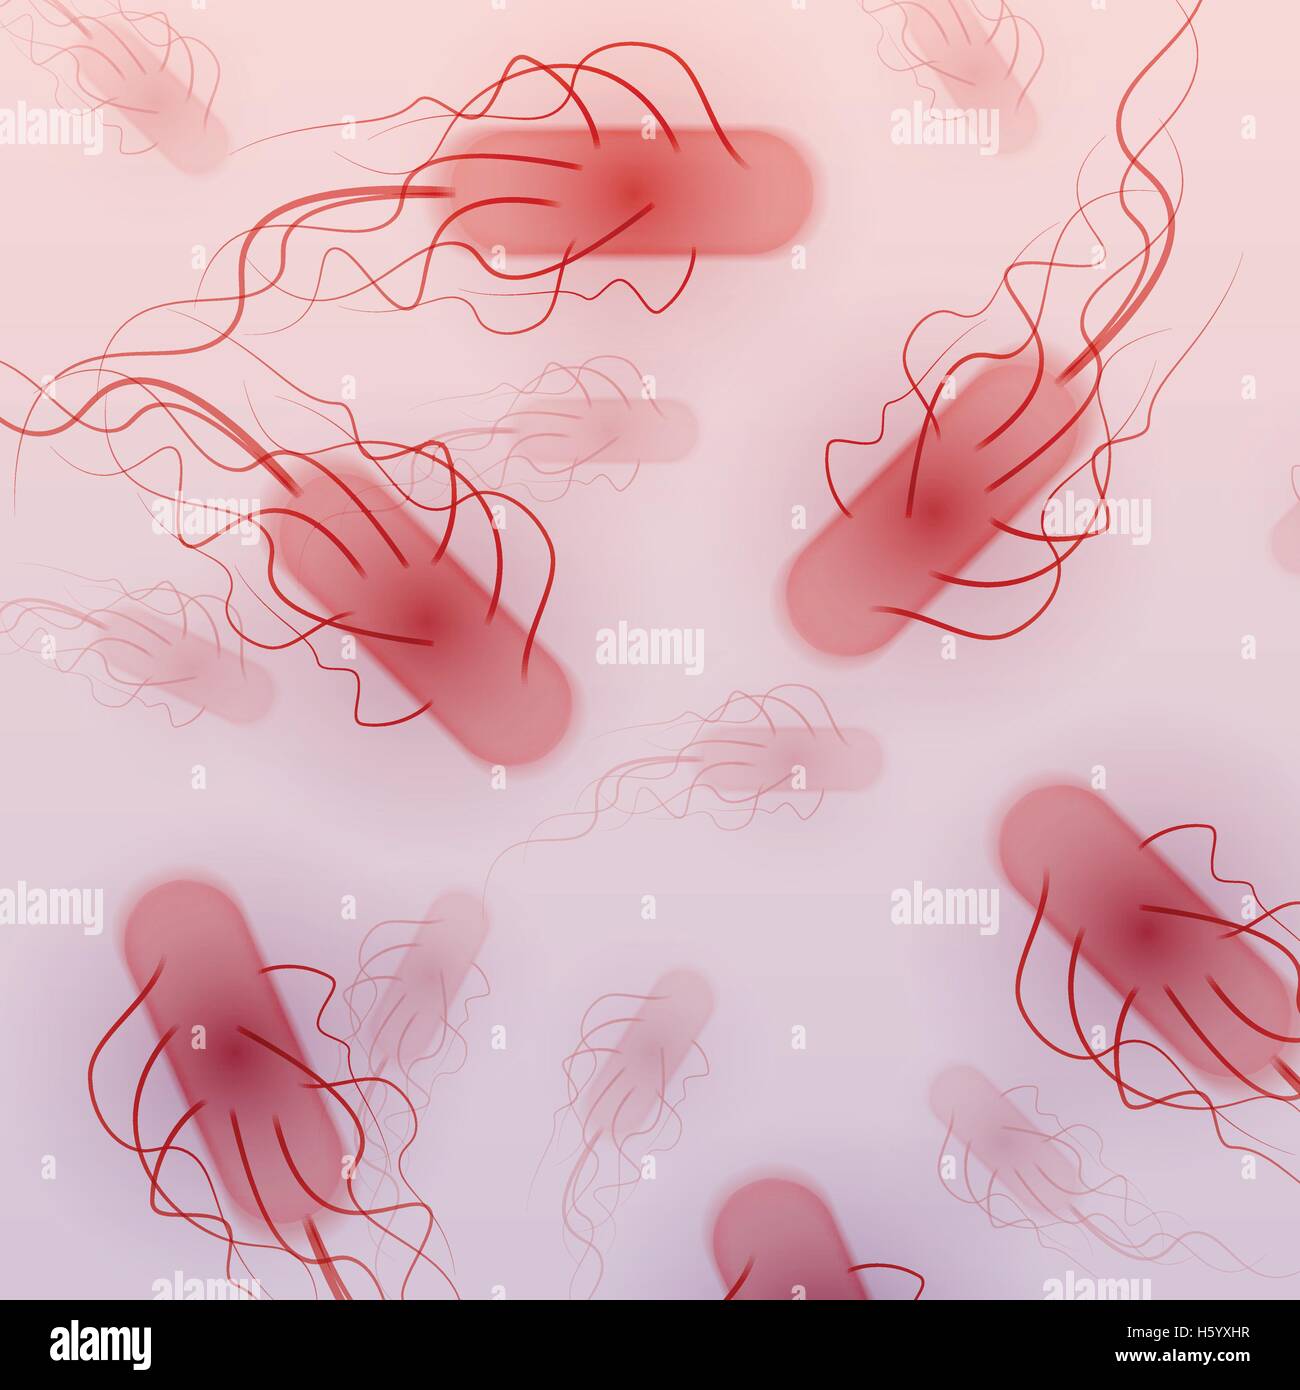 Group of E coli bacteria - Vector Illustration Stock Vector